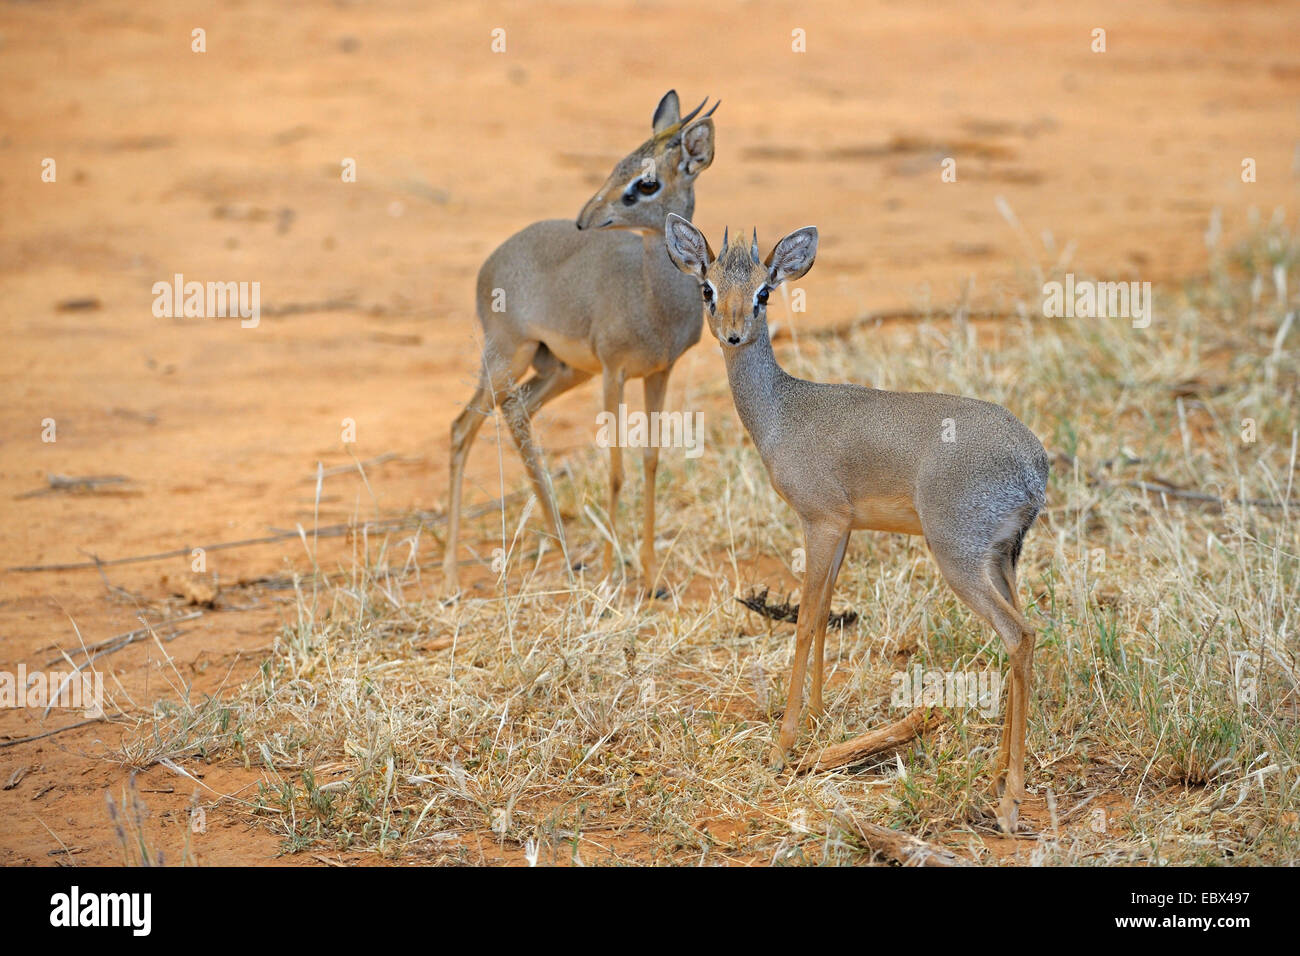 Kirk-Dikdik, Kirk-Dikdiks, Damara Dik (Madoqua Kirkii), paar in ihrem Lebensraum, Kenya, Samburu National Reserve Stockfoto